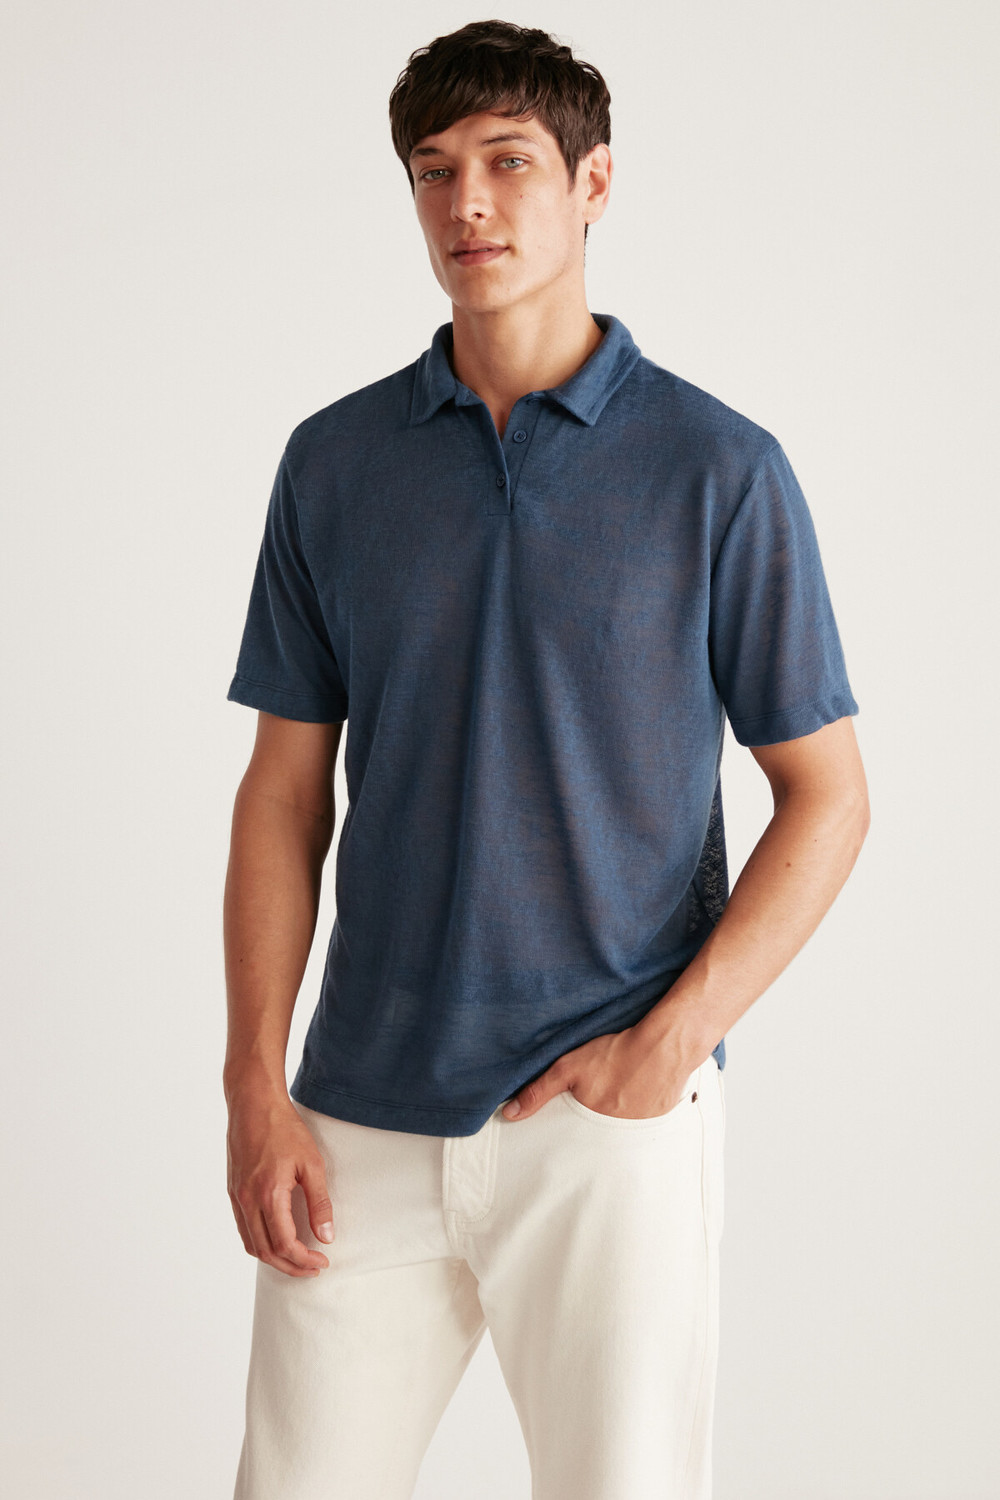 GRIMELANGE Toby Linen Look Regular, Navy Blue Single Polo Neck T-shirt.